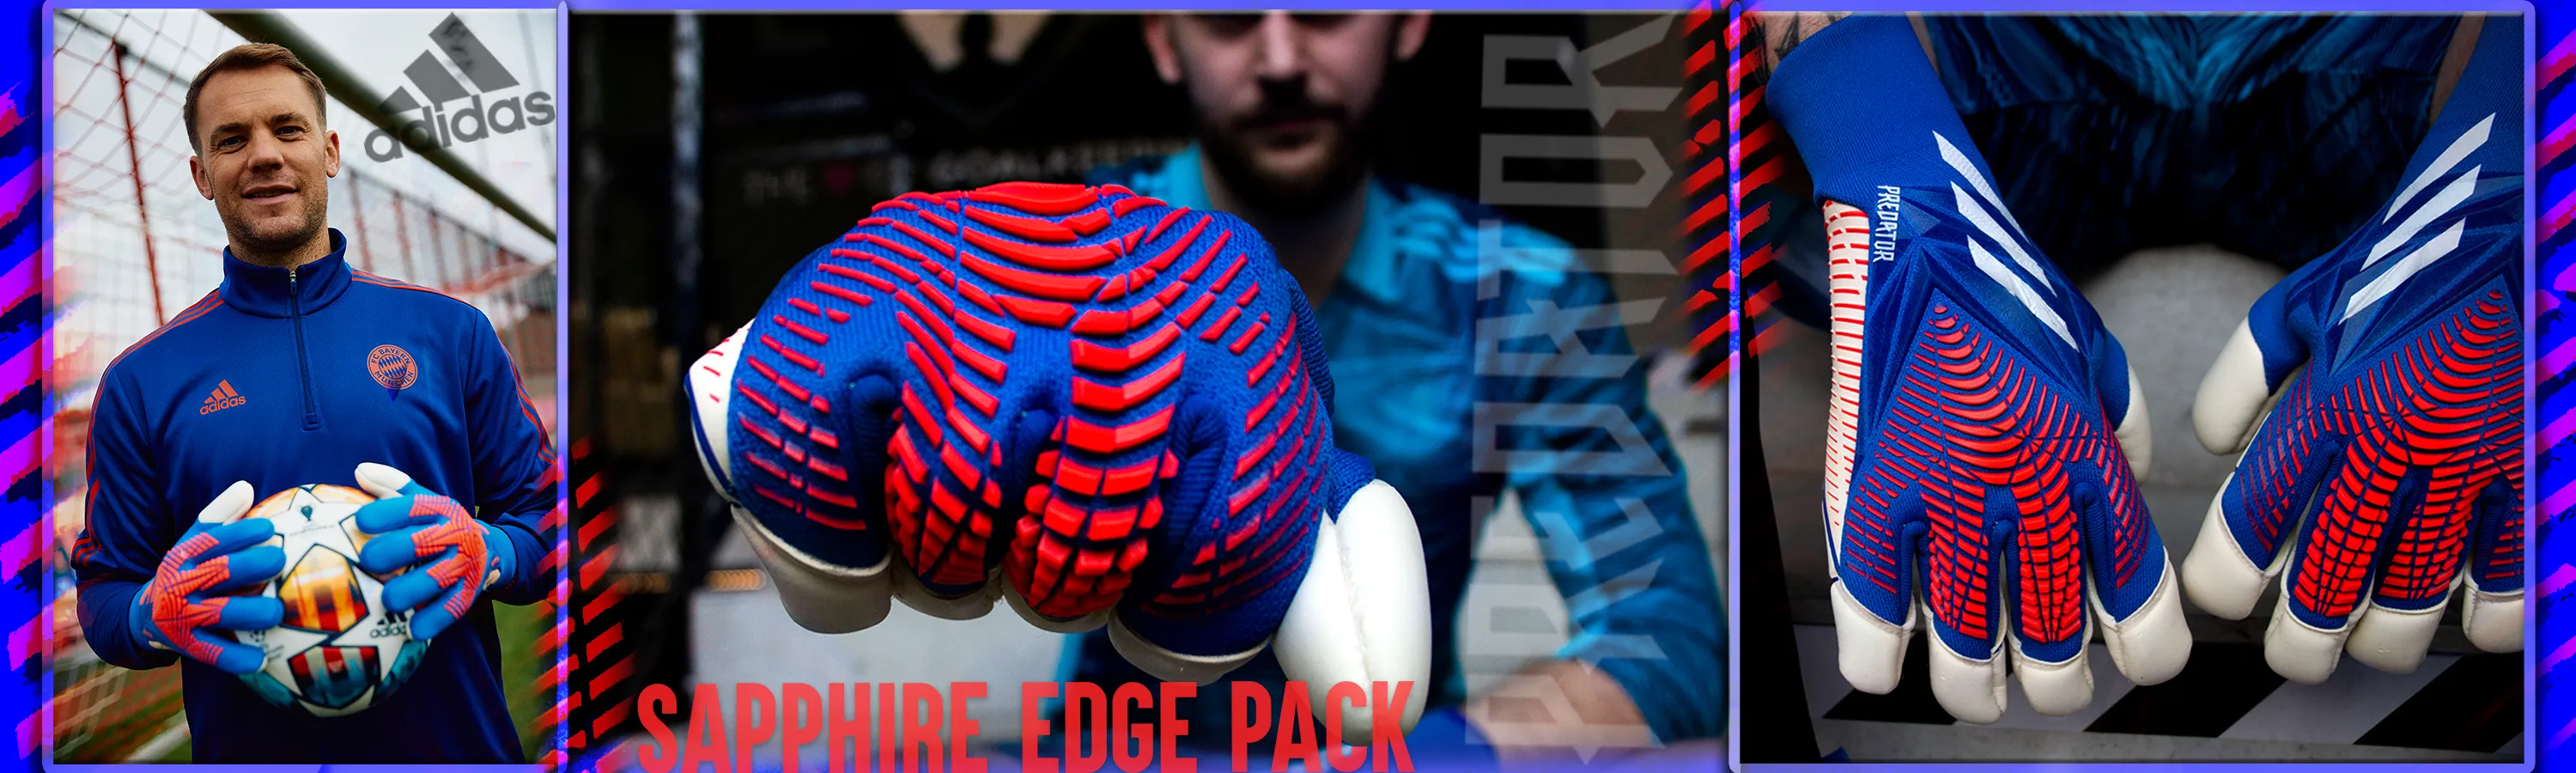 Adidas Sapphire Edge Pack